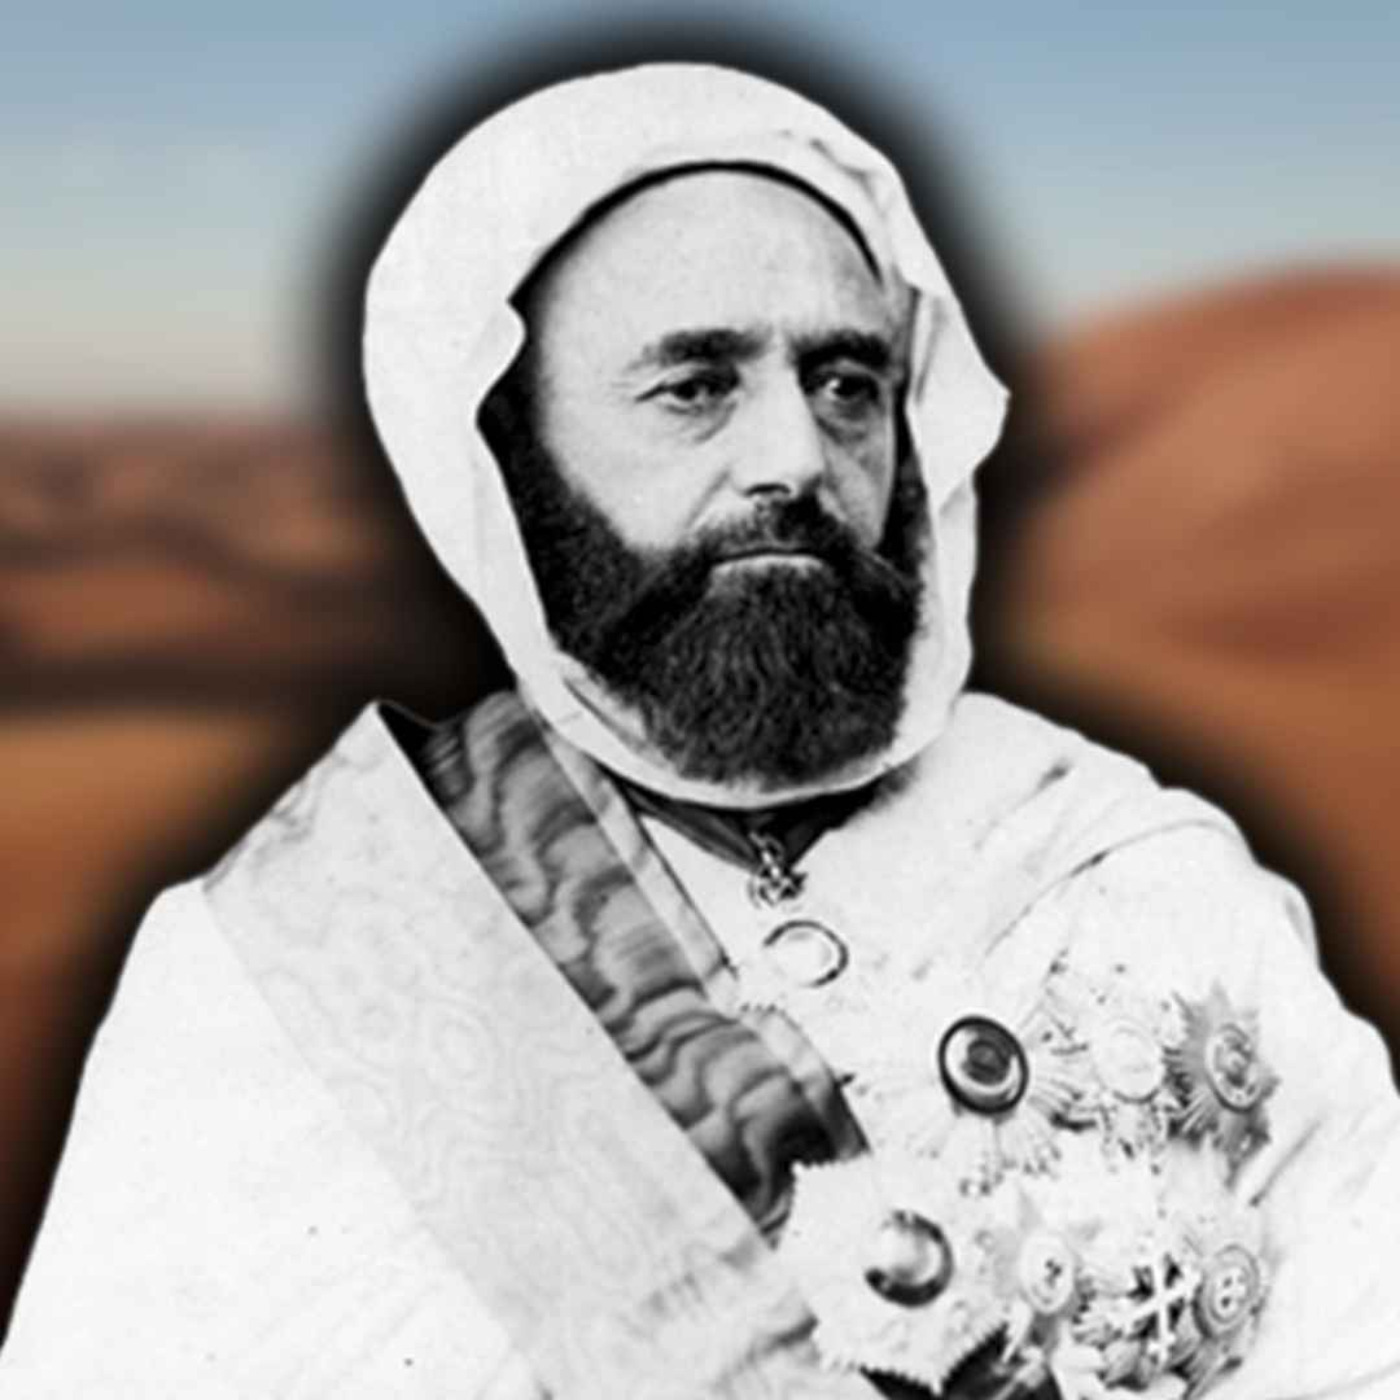 Emir Abd el-Kader - The Sufi Muslim Warrior Who Protected Christians